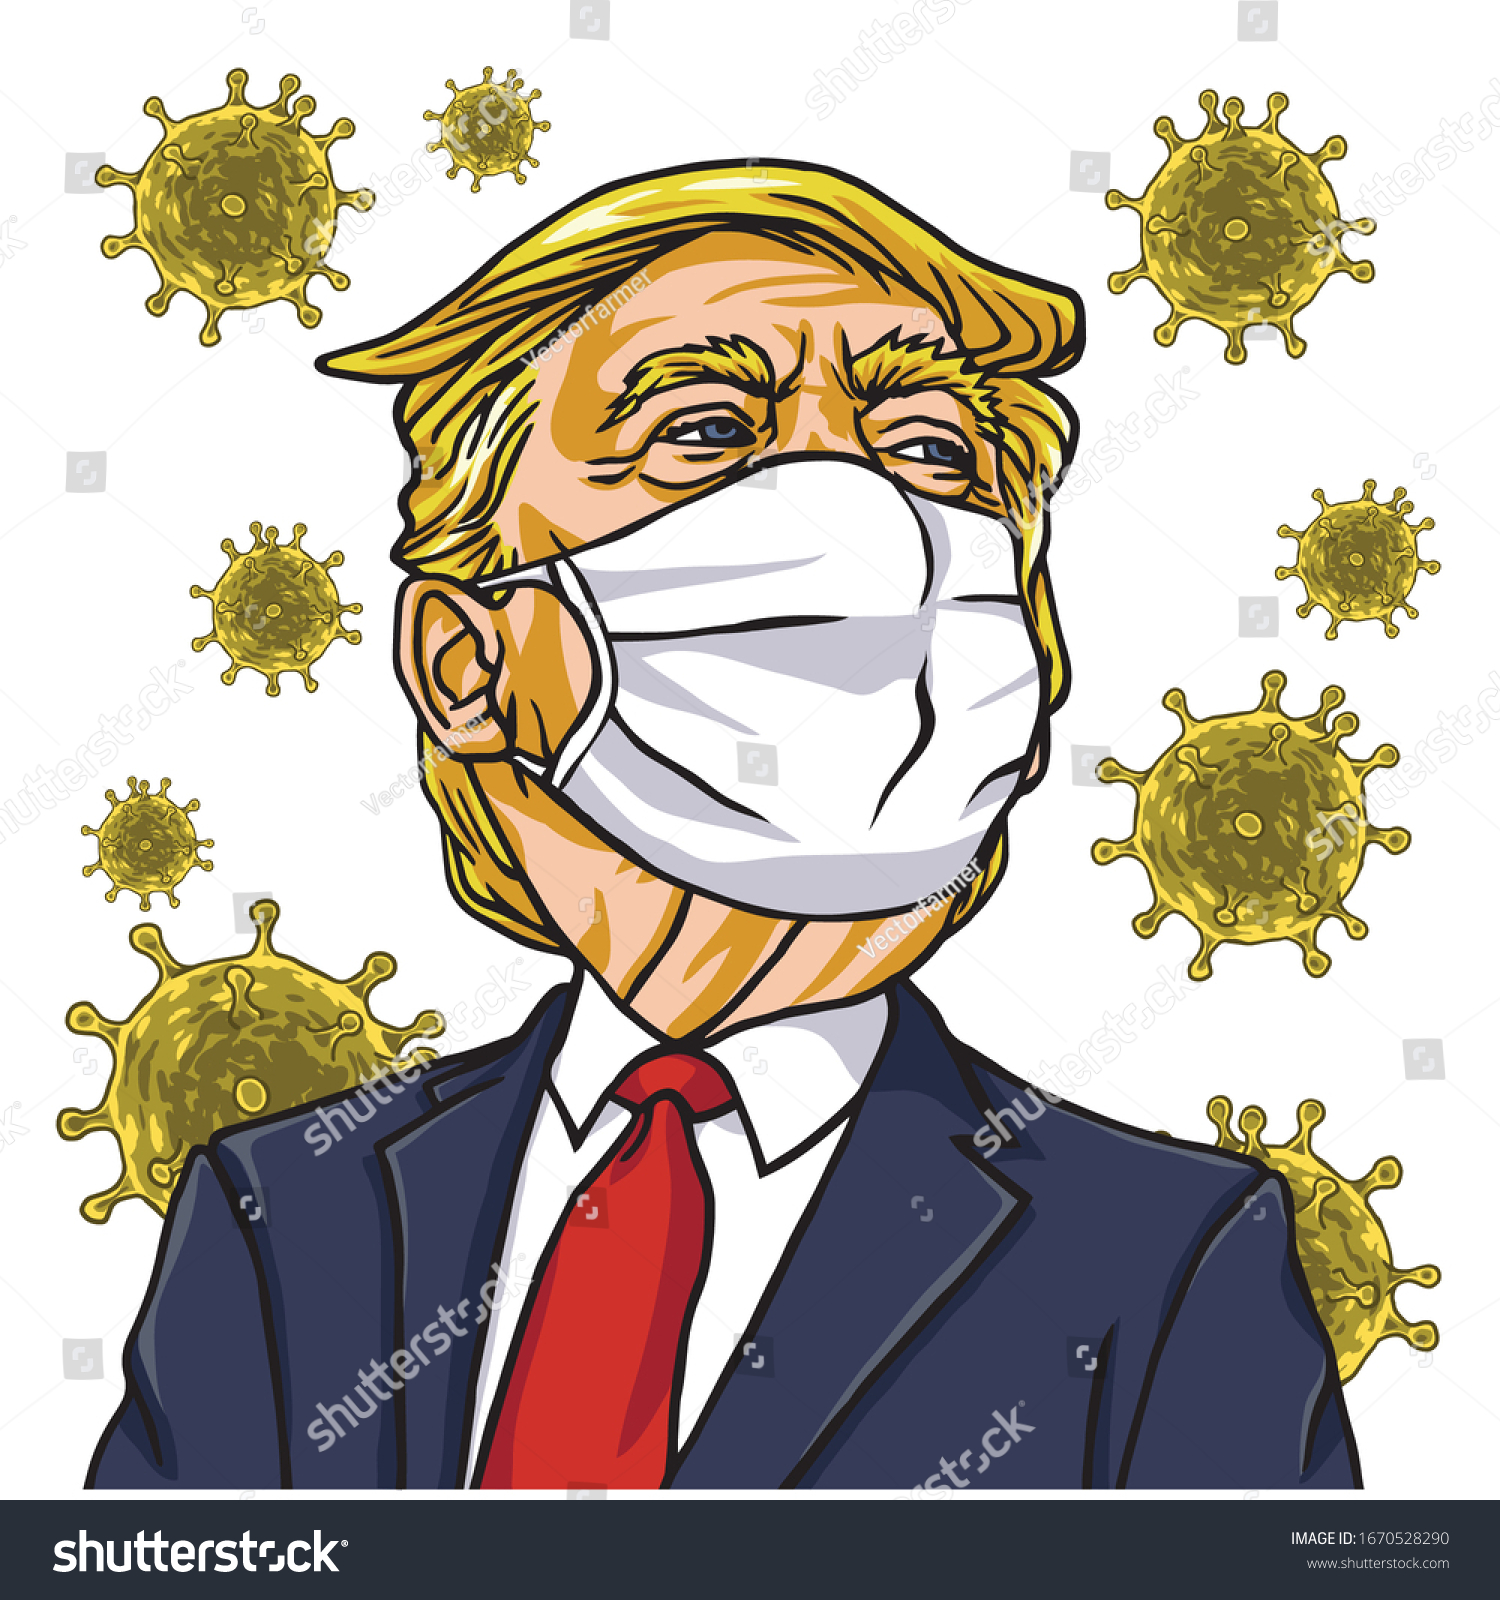 Coronavirus Image Cartoon Drawing